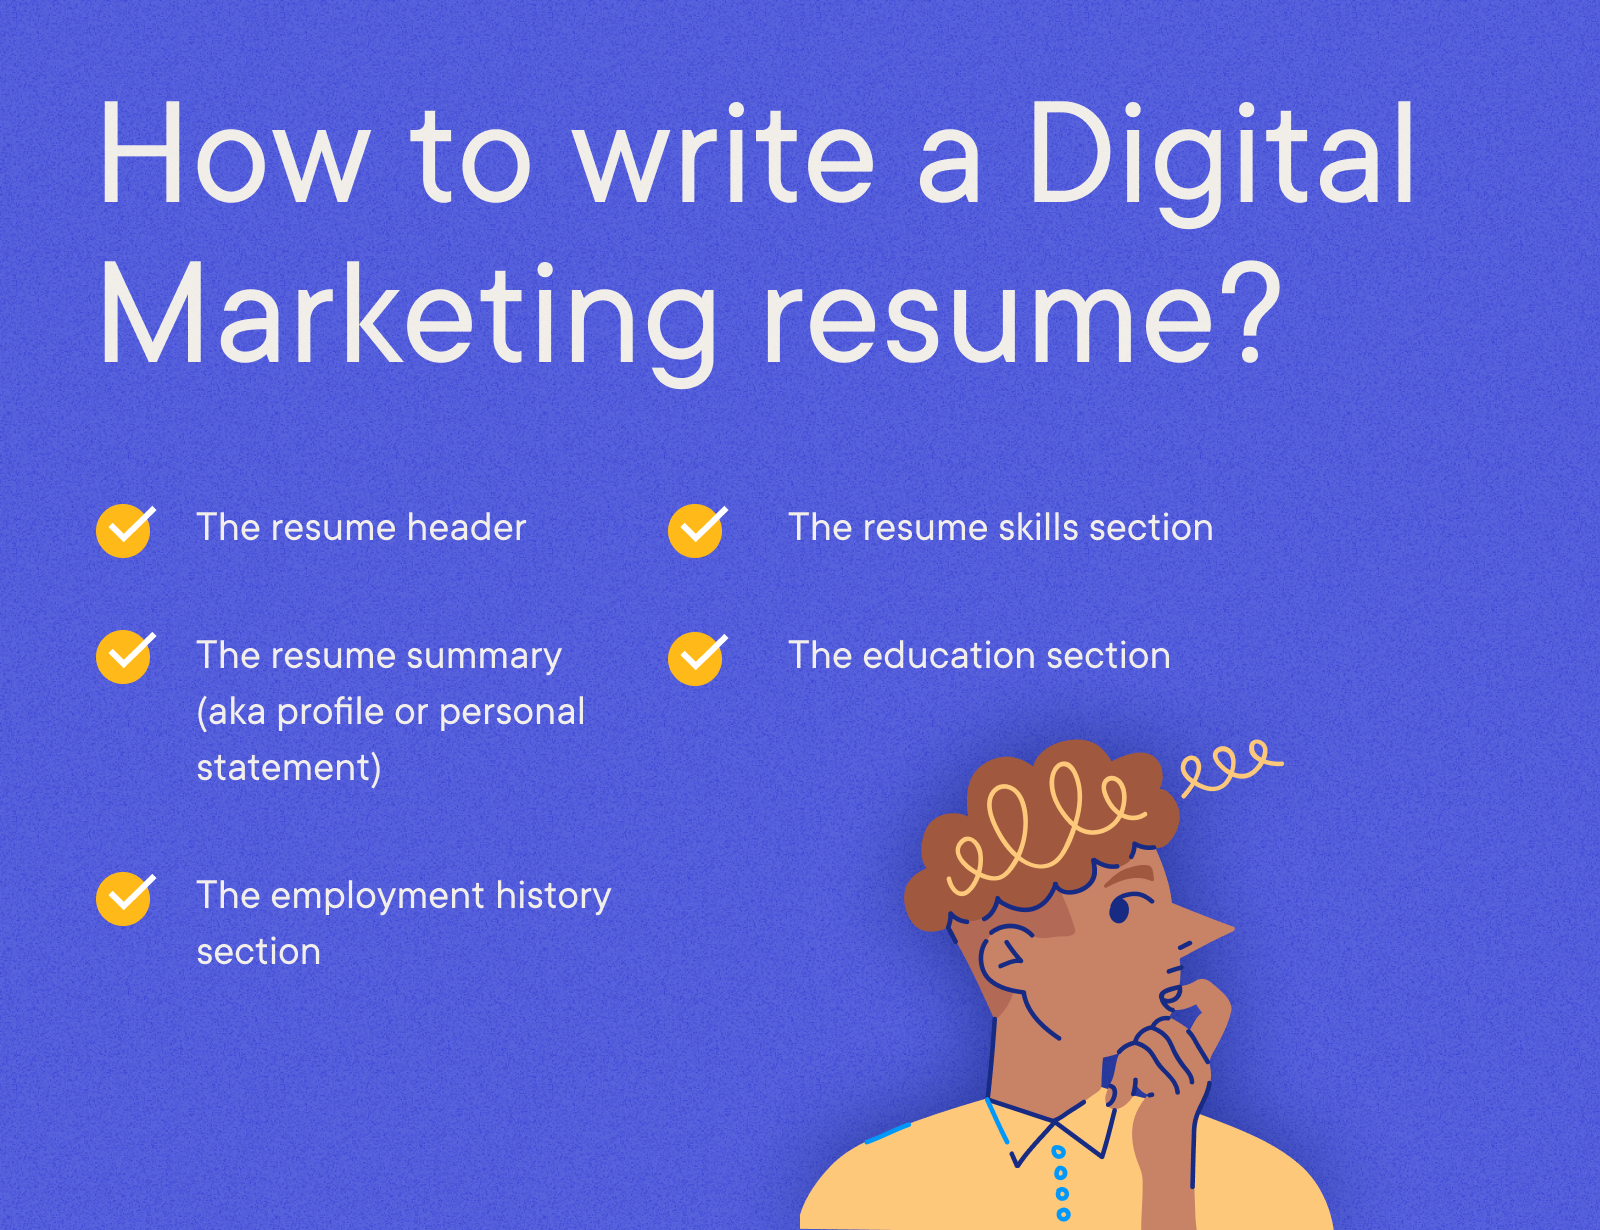 Digital Marketing - How to write a Digital Marketing resume?